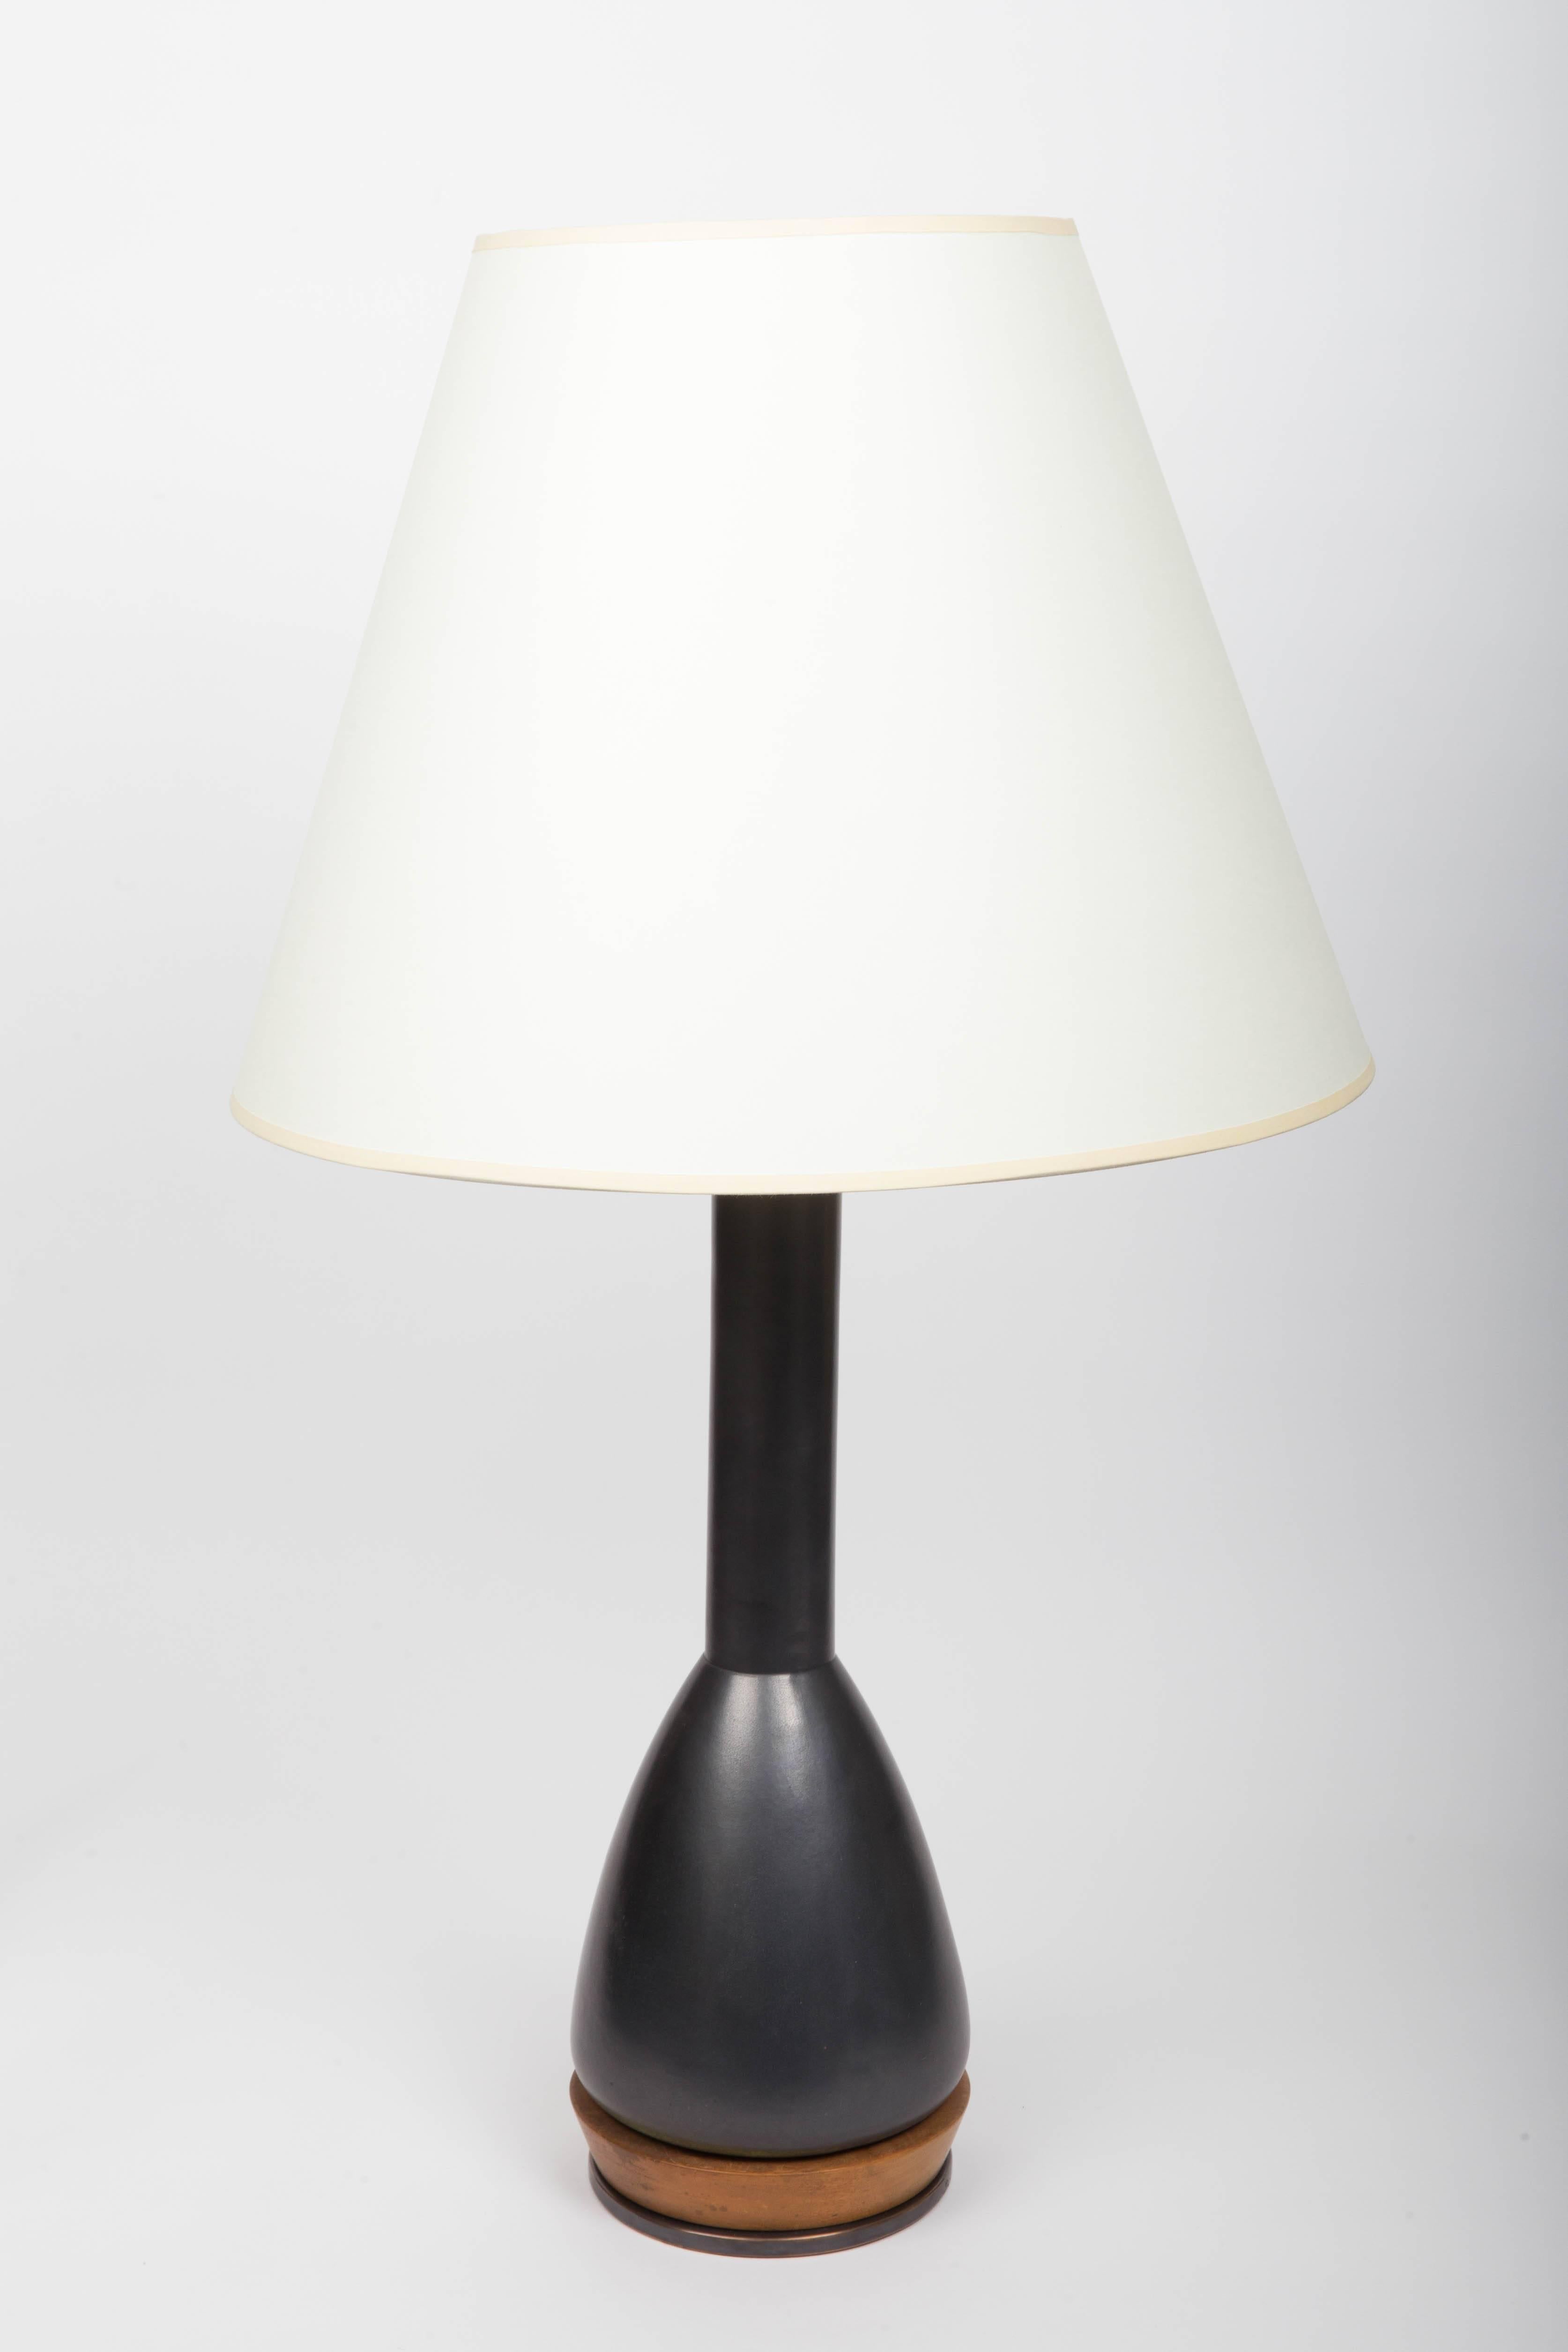 Black Ceramic Table Lamp Attributed to Gordon & Jane Martz, c. 1960s 1